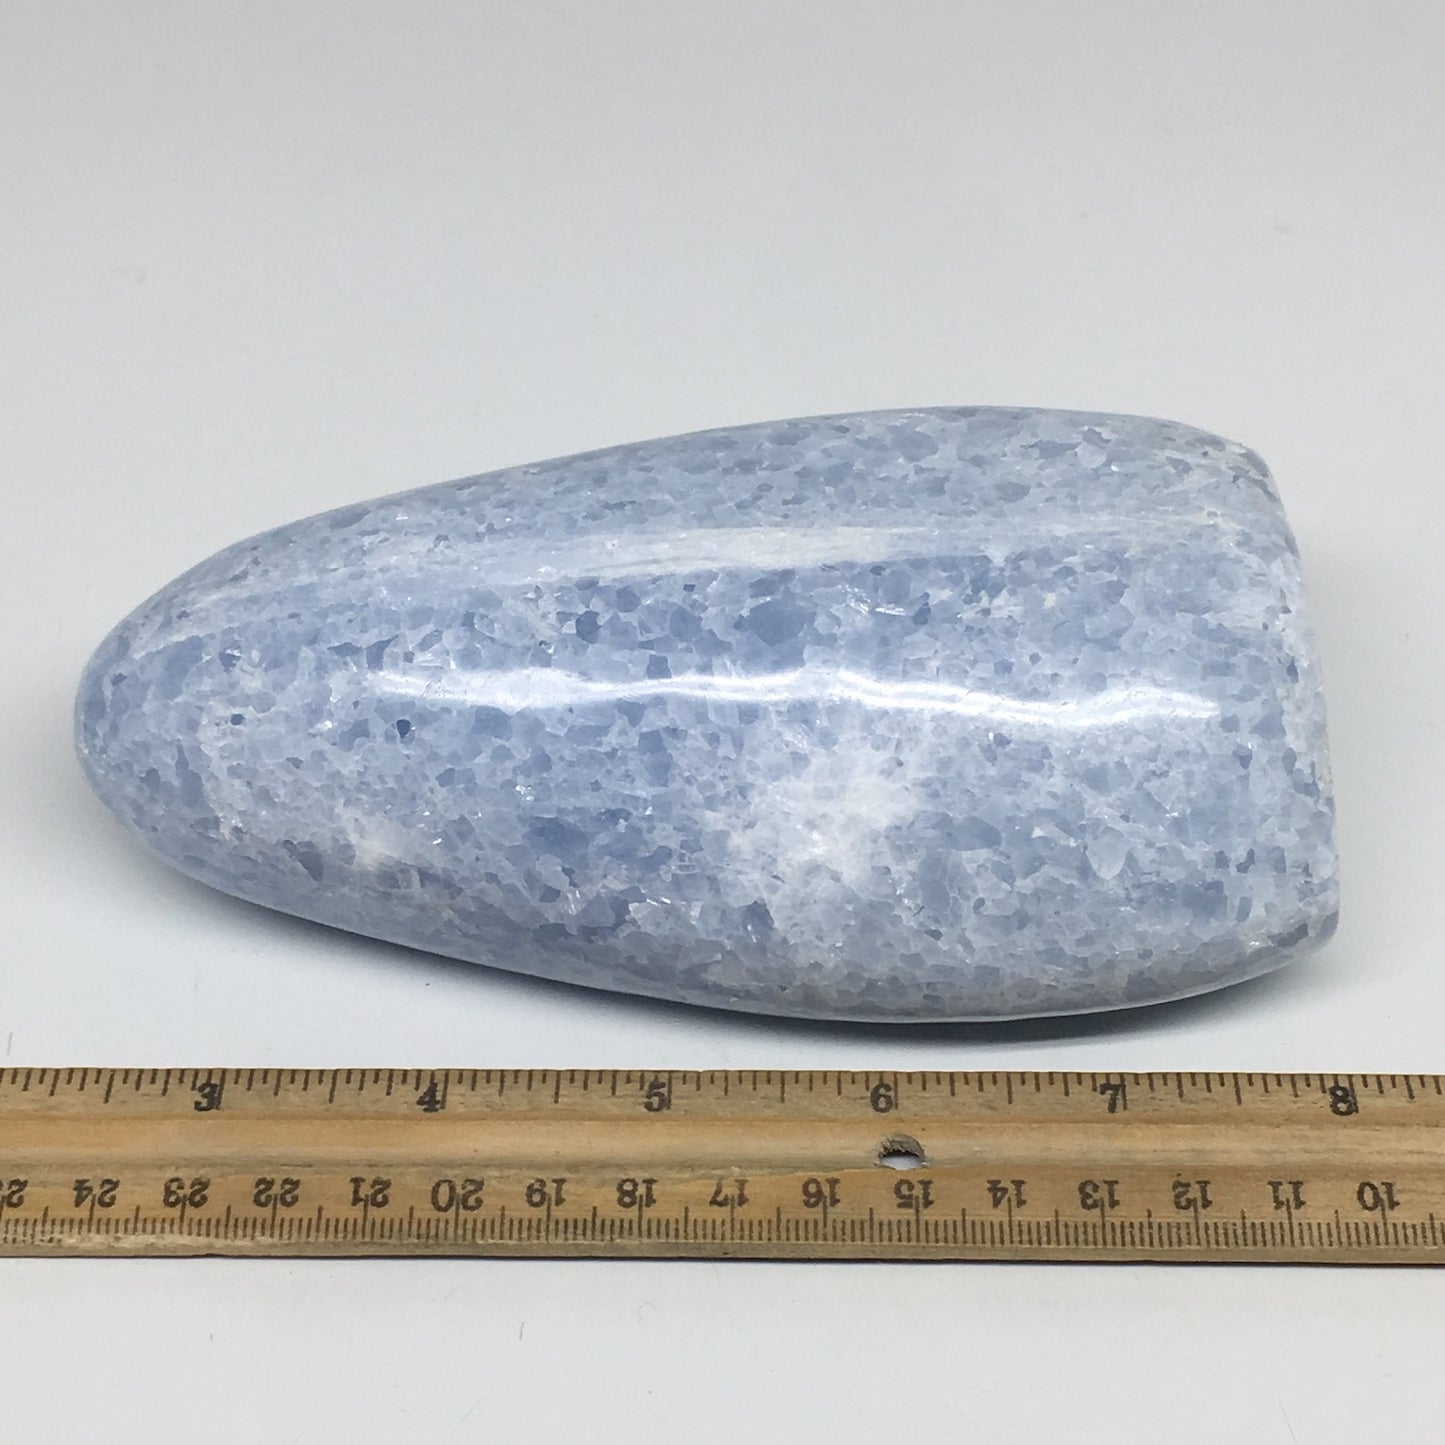 928g,5.9"x2.9"x2" Blue Calcite Polished Freeform Stand alone @Madagascar,MSP984